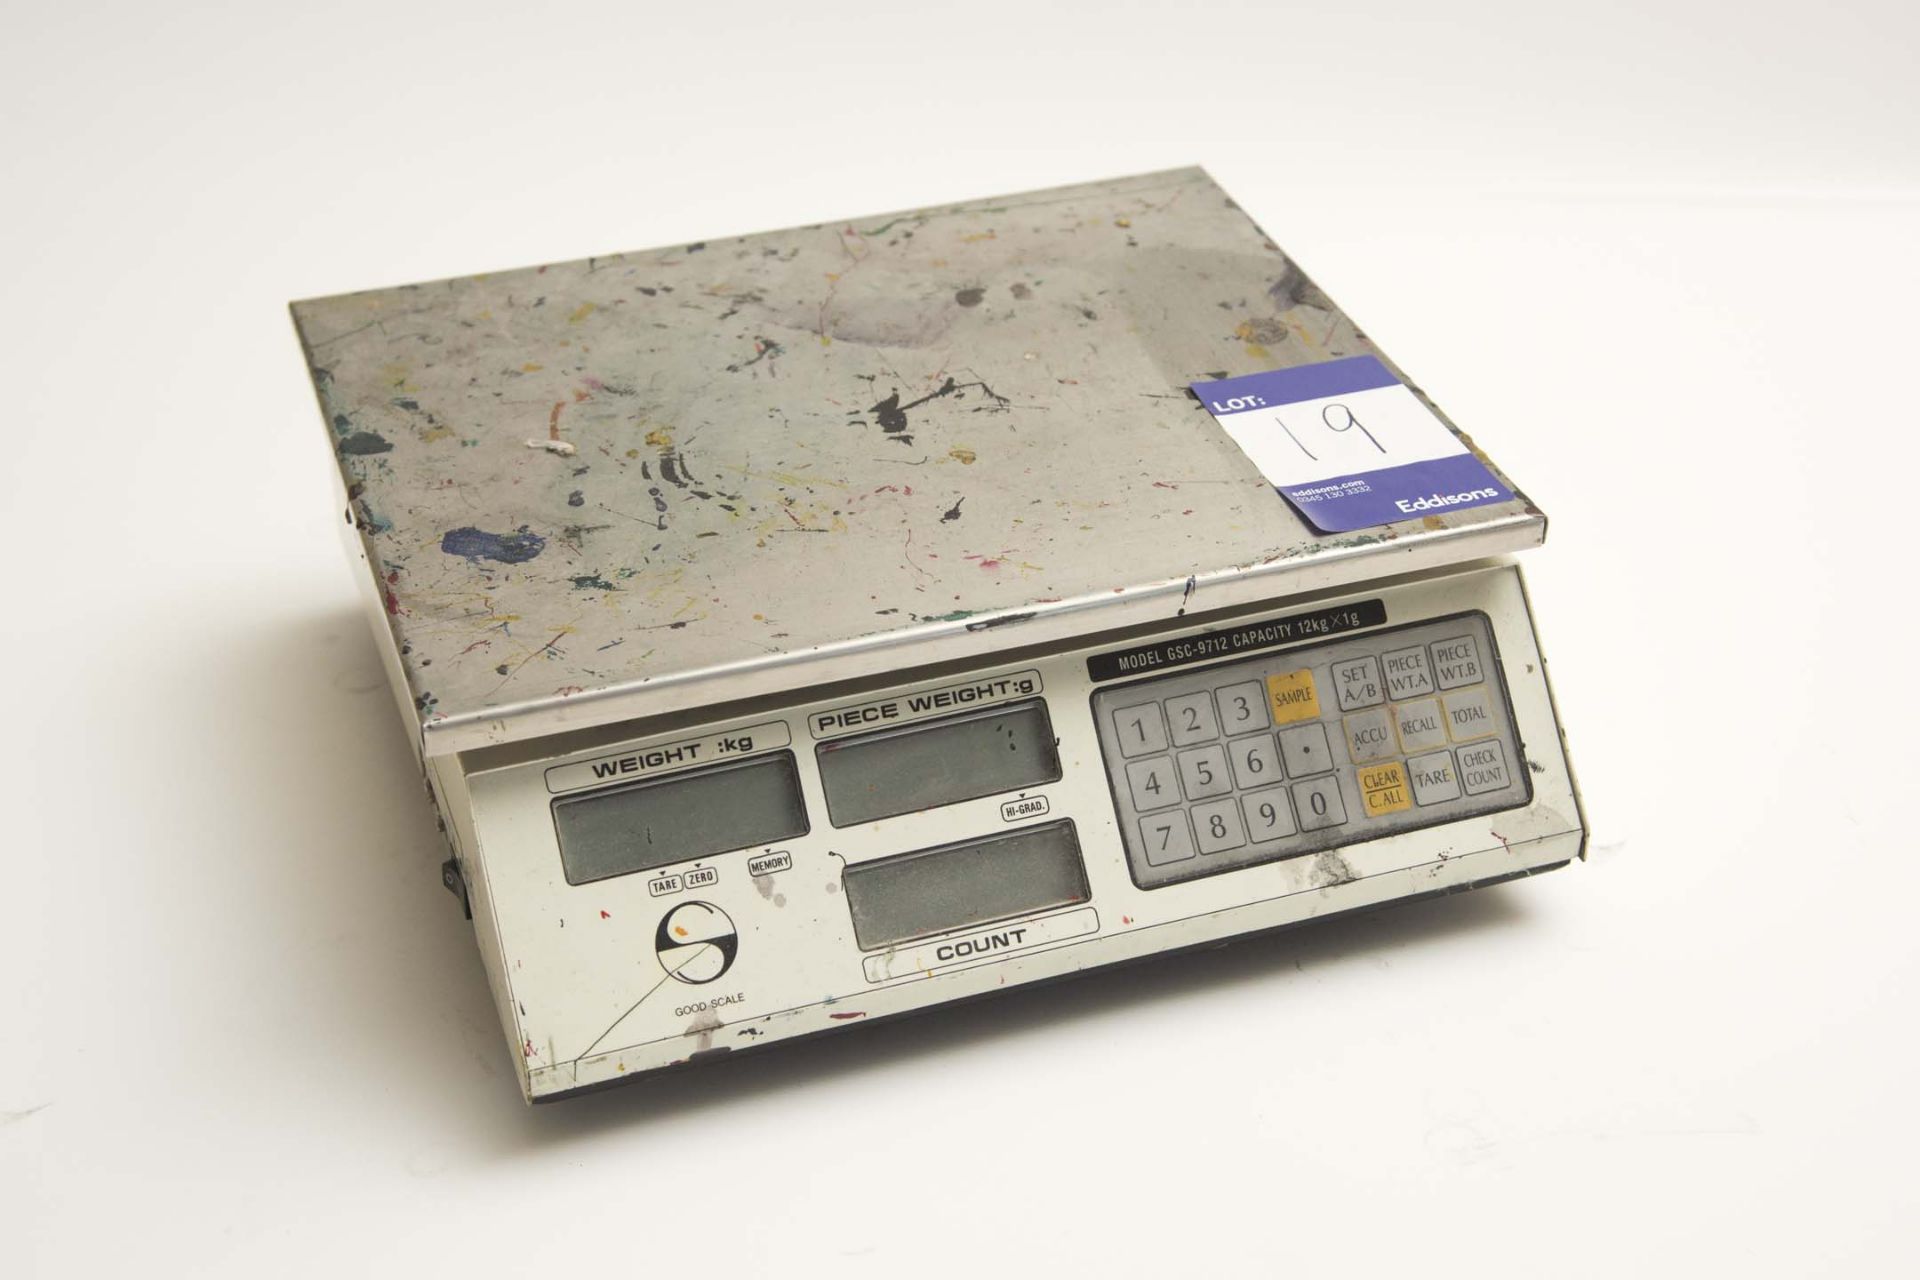 GoodScale Model GSC-9712 Pantone digital scale